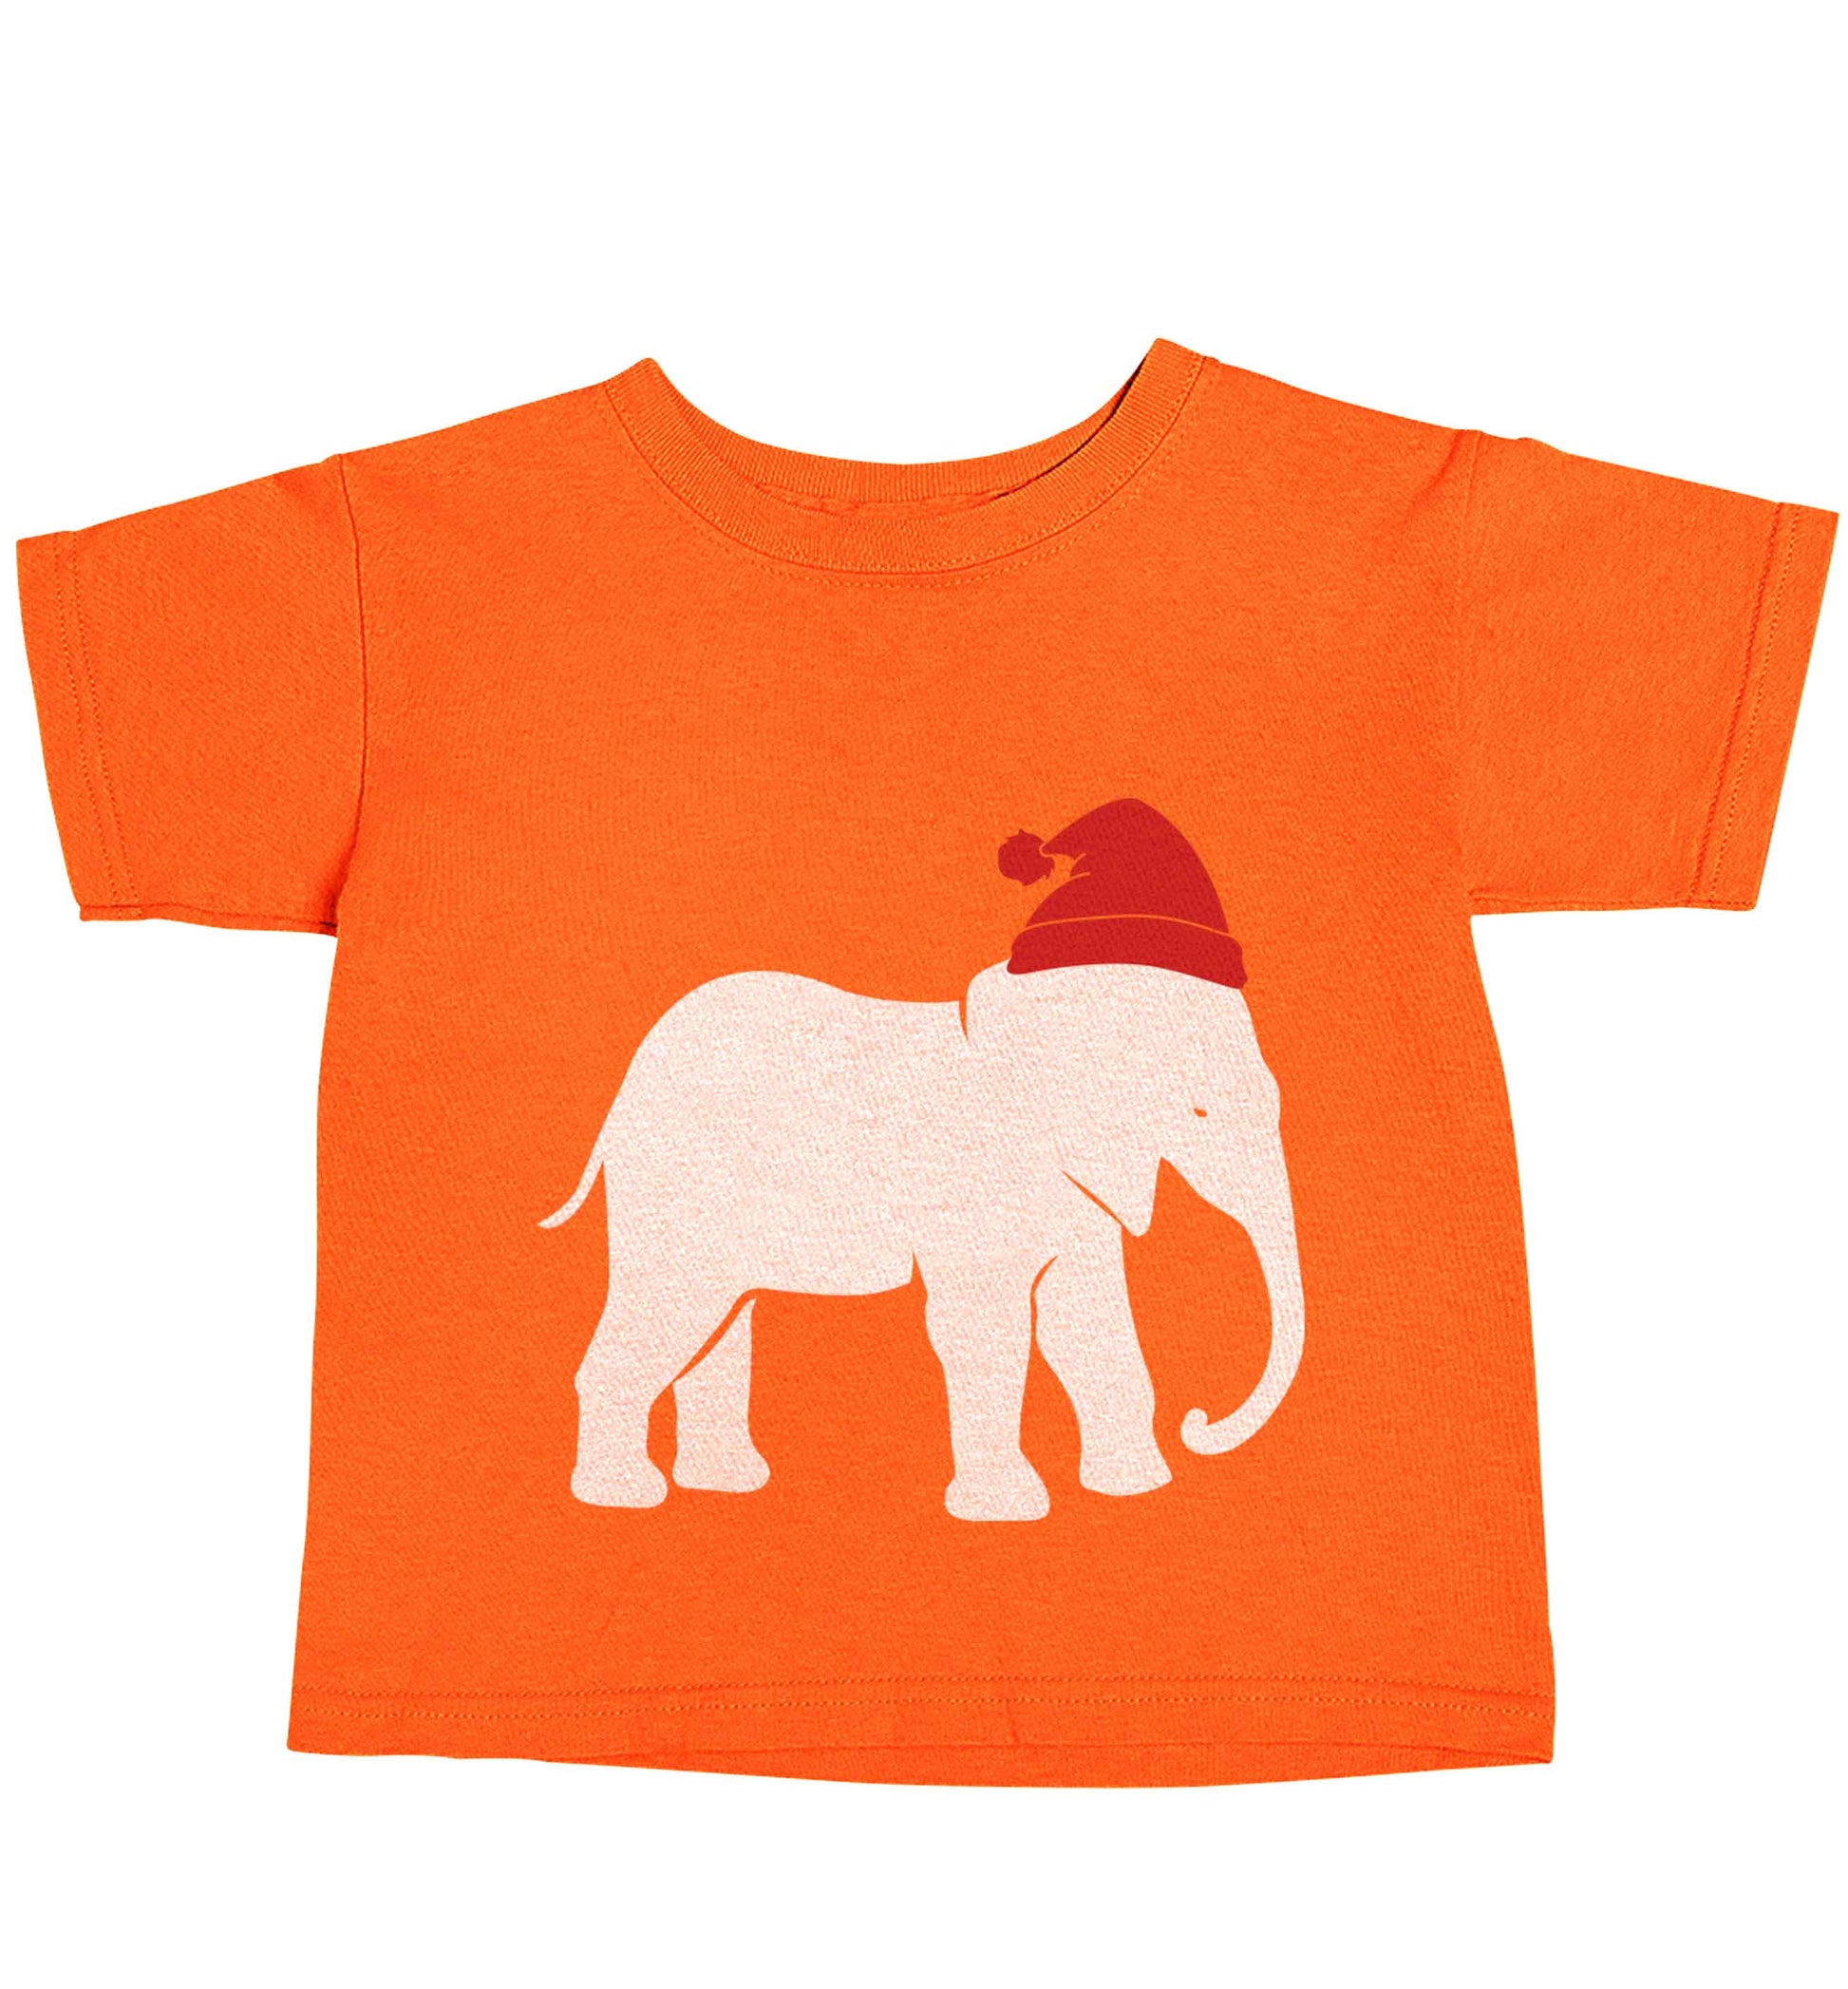 Pink elephant Santa orange baby toddler Tshirt 2 Years